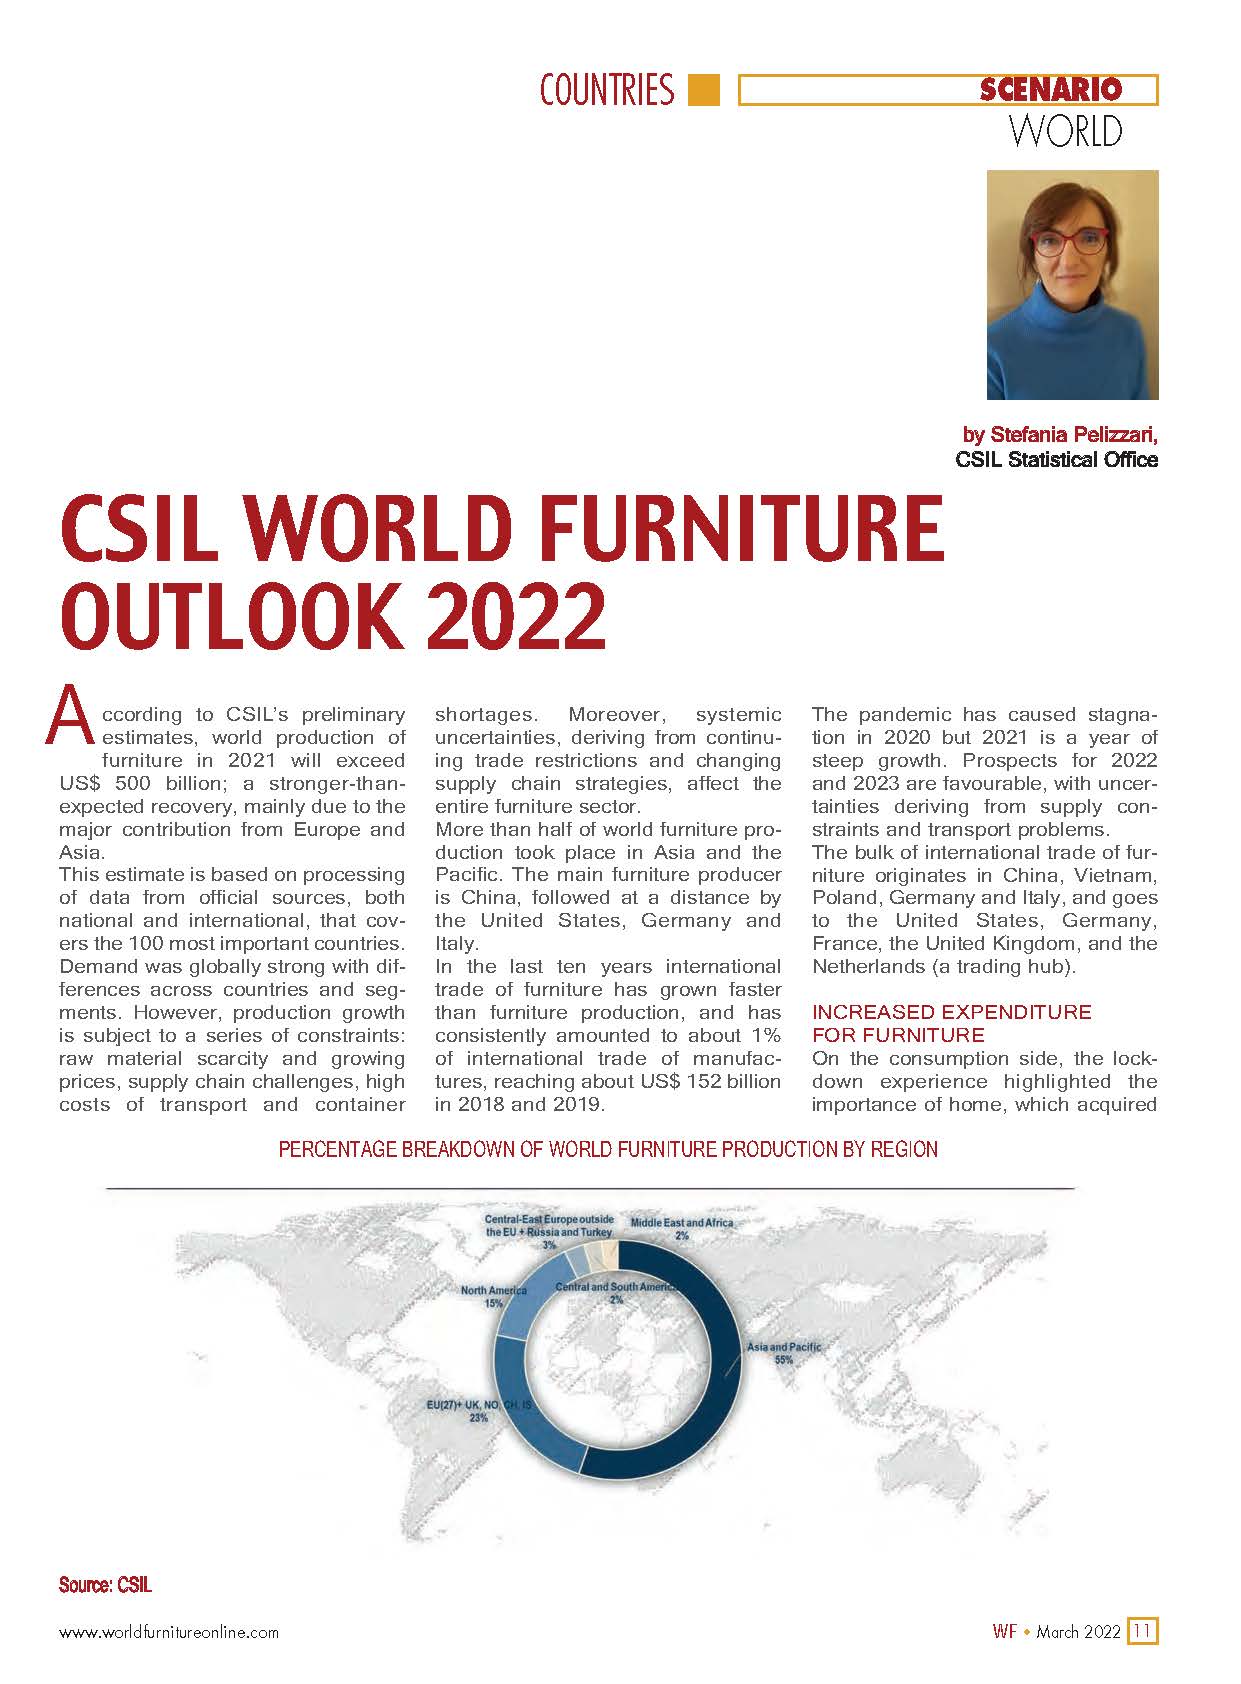 World furniture Outlook 2022